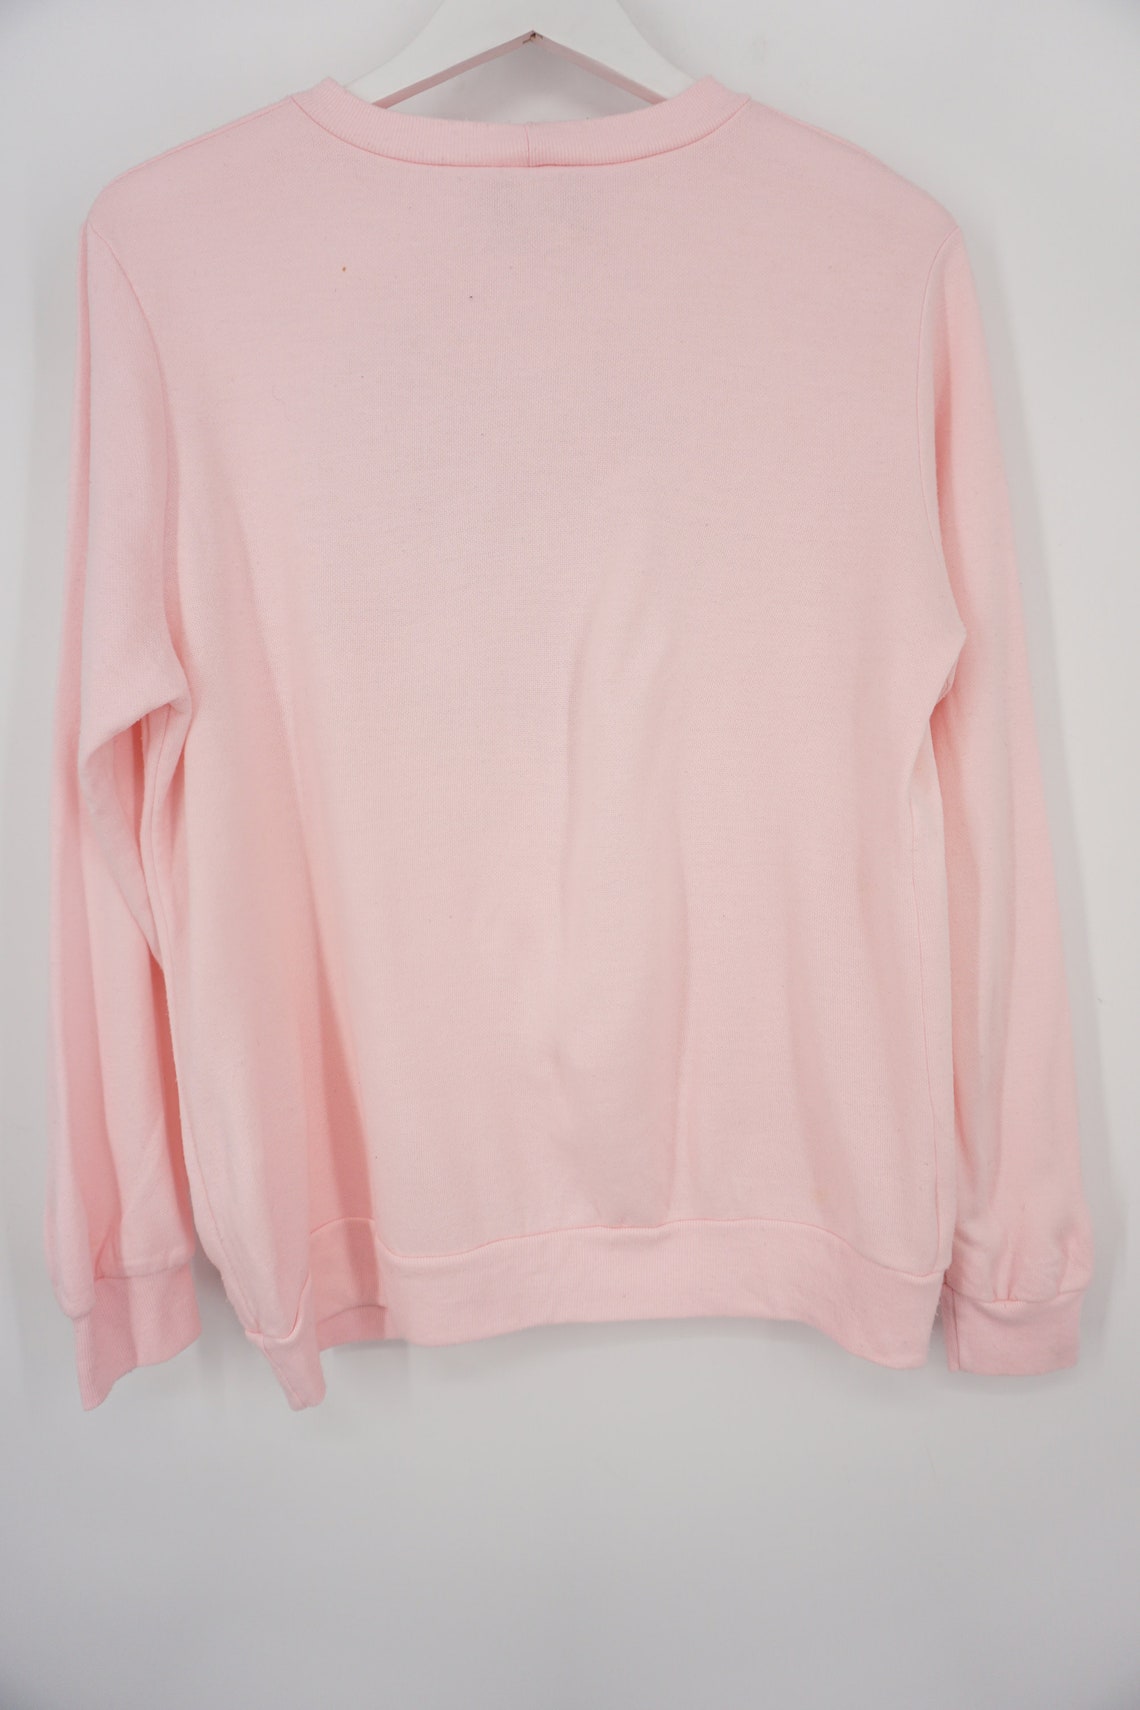 Vintage Pink Flower Crewneck Sweatshirt By Blair Size Medium / | Etsy